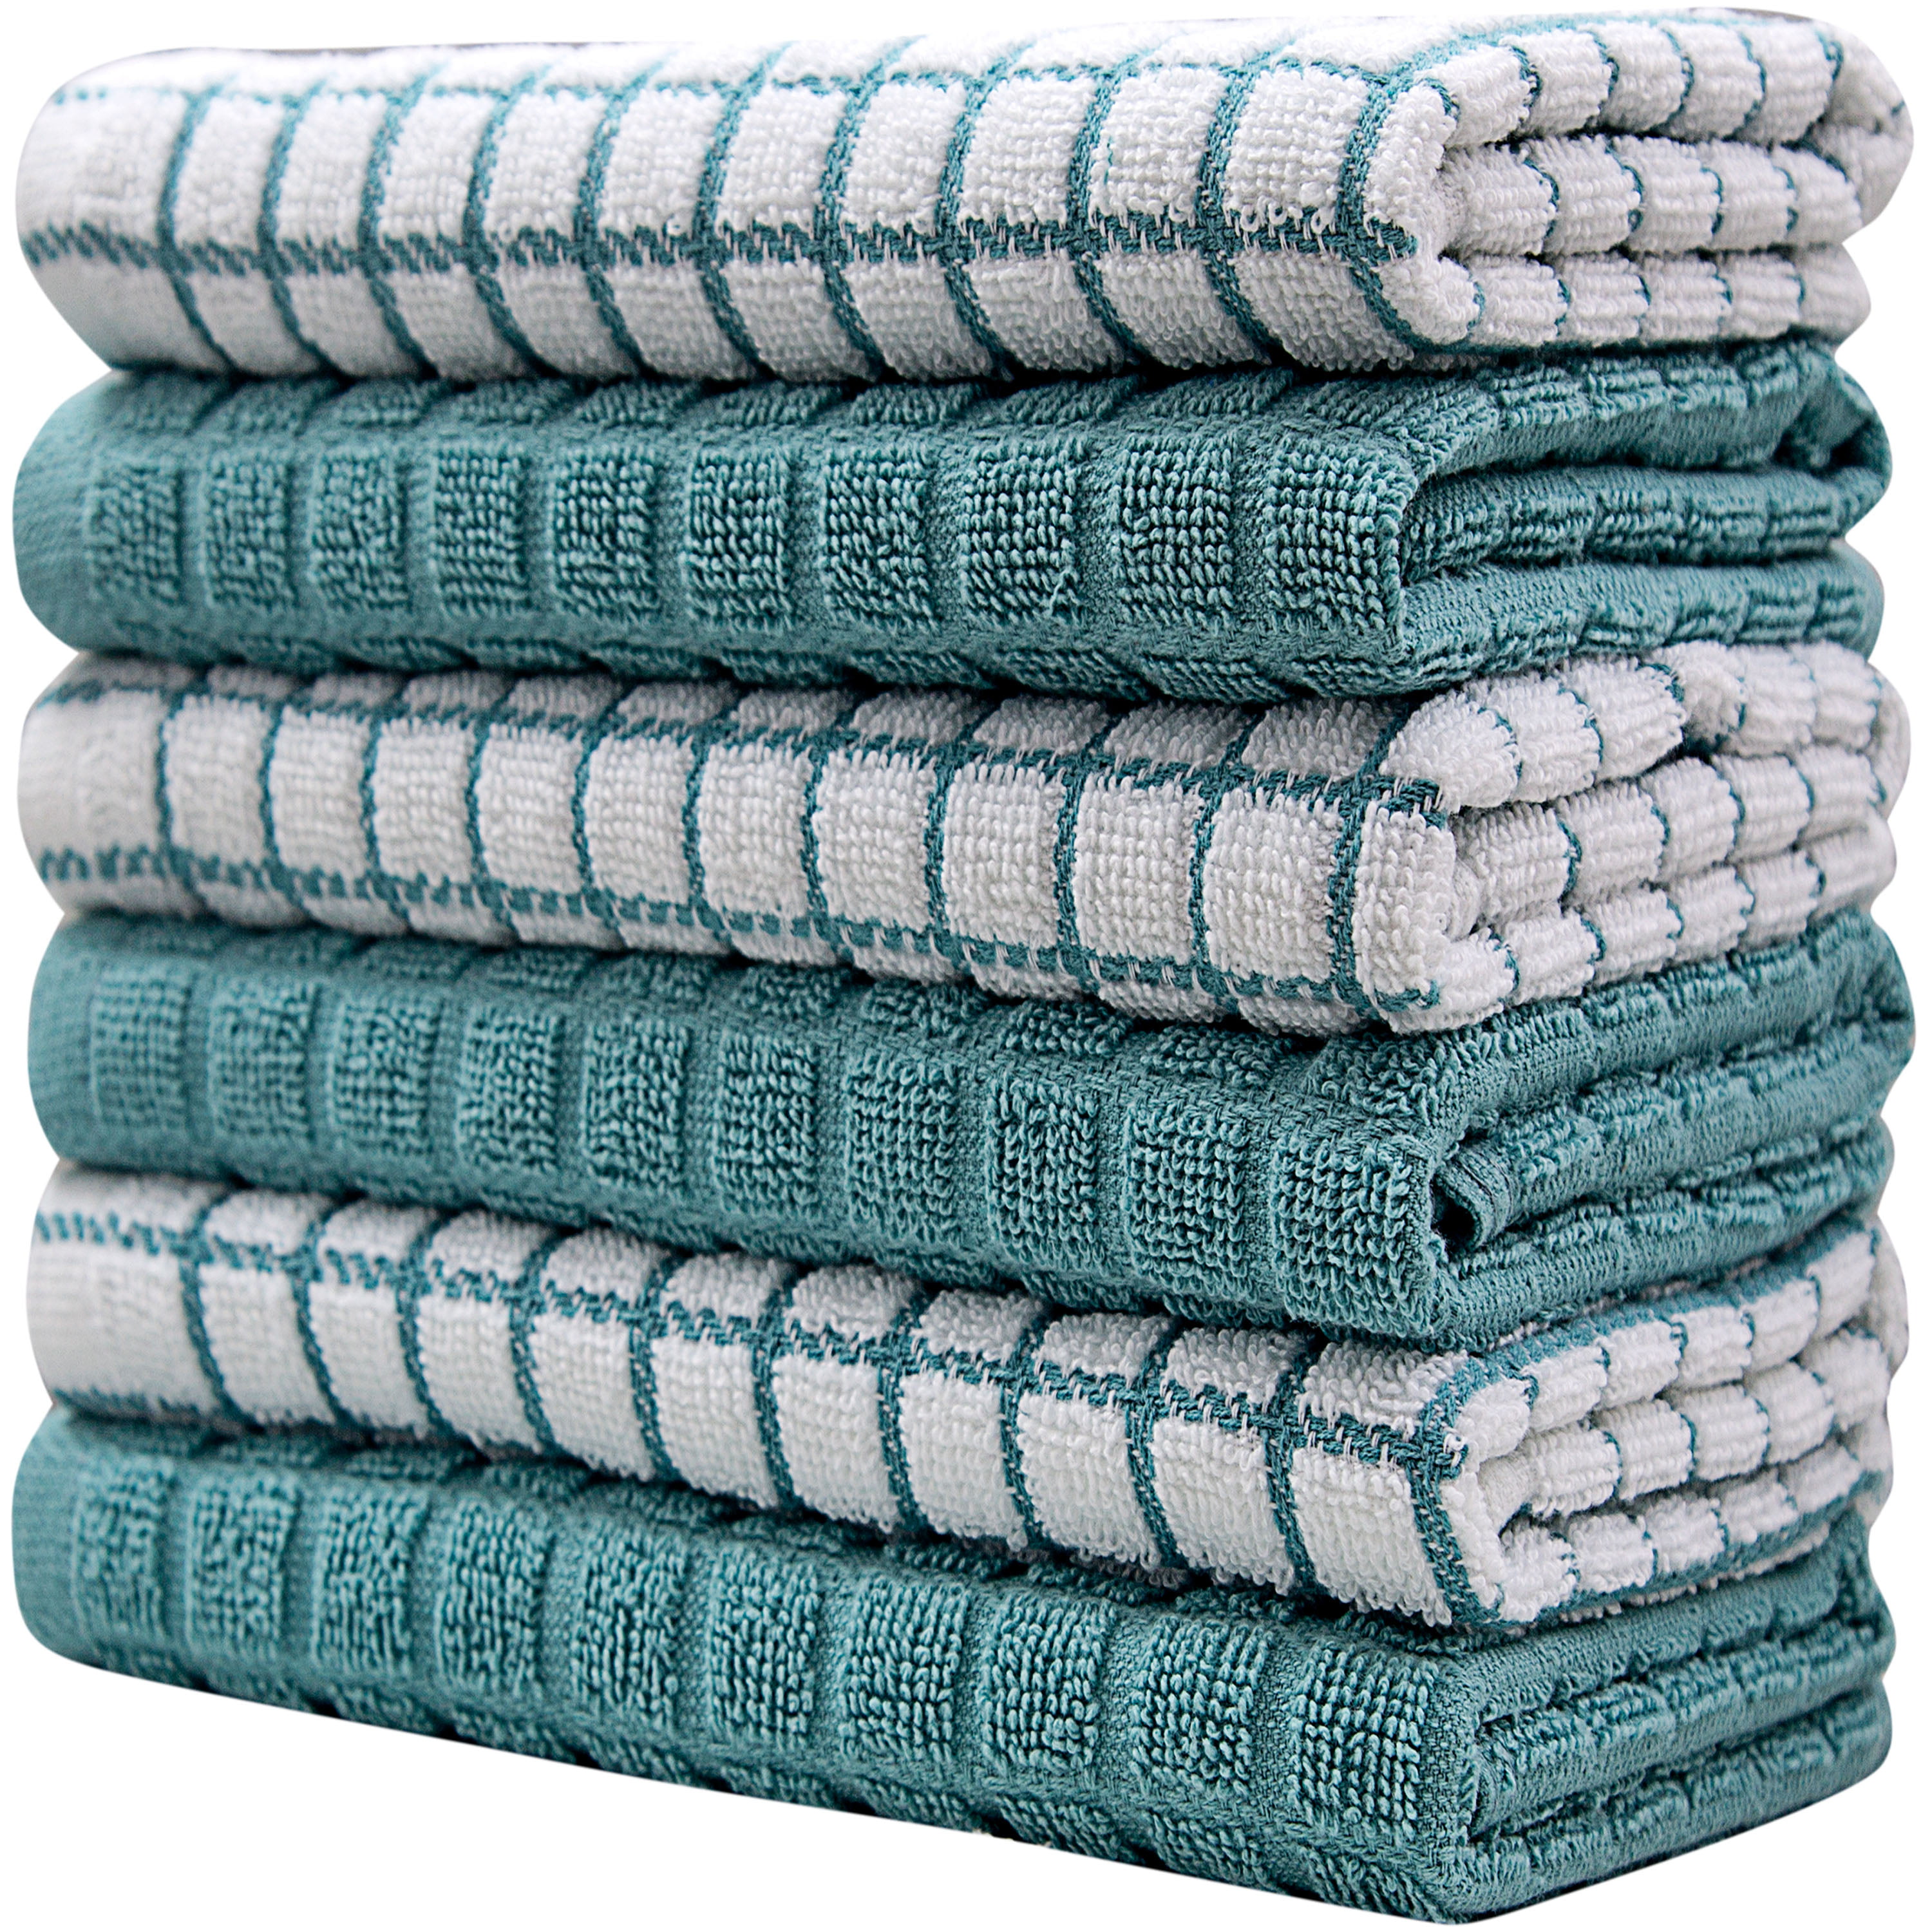 Kitchen Dish Towels Ring Spun Cotton Large 18 x 28 6-Pack Big Waffle -  Kitchen Towel, Hand Towels, Tea Towels, Dish Towels and Dish Cloth (Cream).